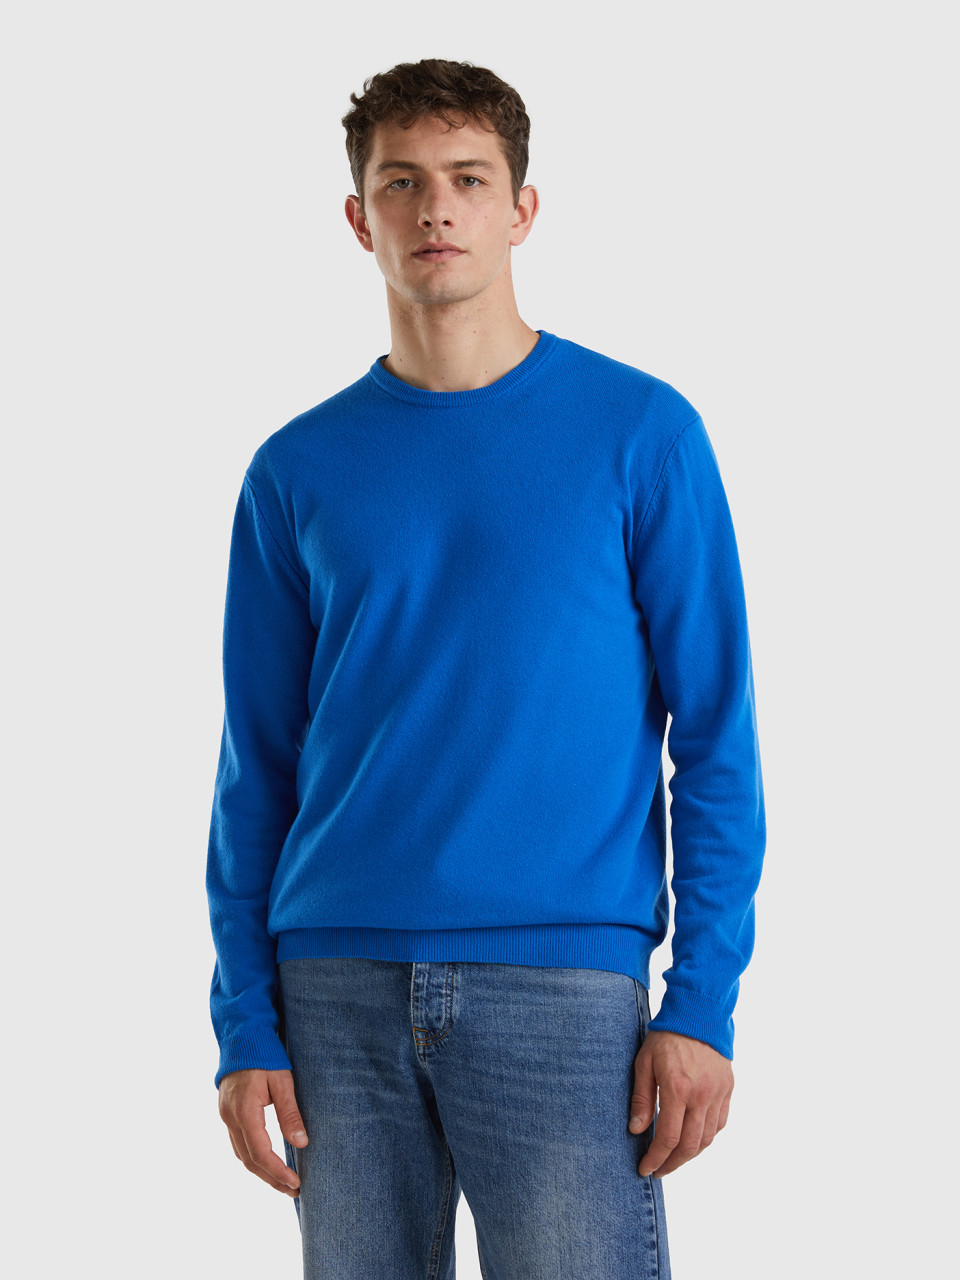 Benetton, Cornflower Blue Crew Neck Sweater In Pure Merino Wool, Bright Blue, Men